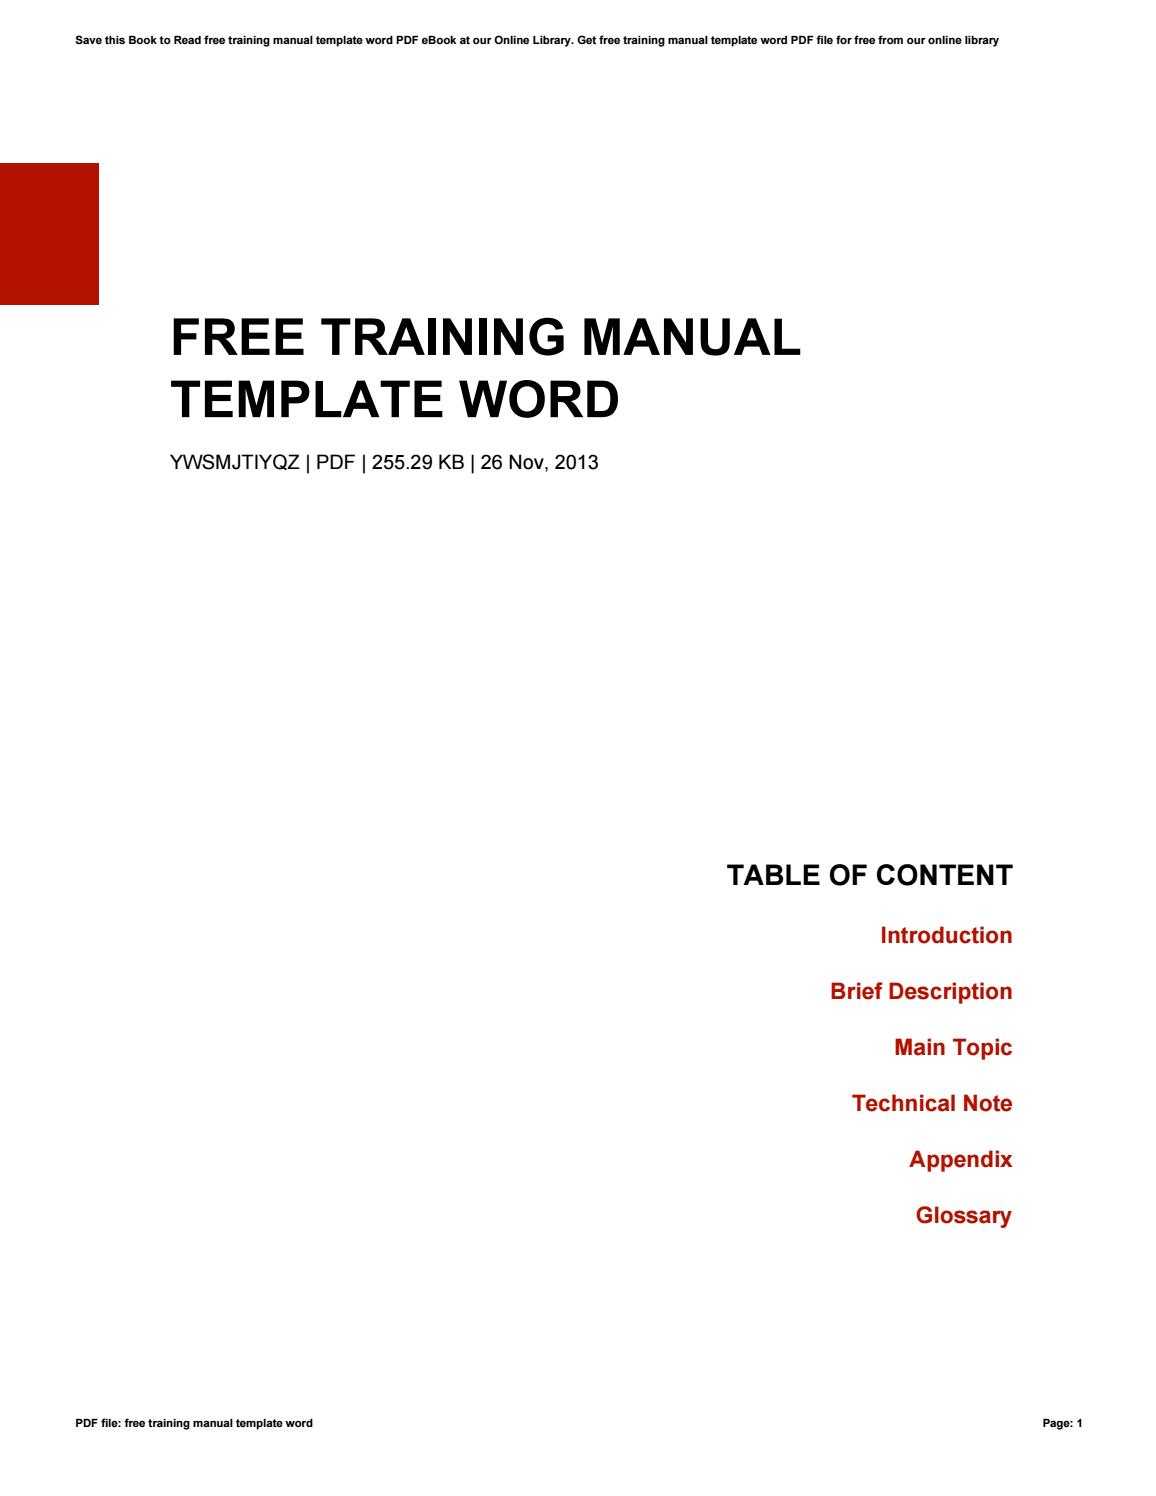 Free Training Manual Template Wordkazelink257 - Issuu For Training Documentation Template Word